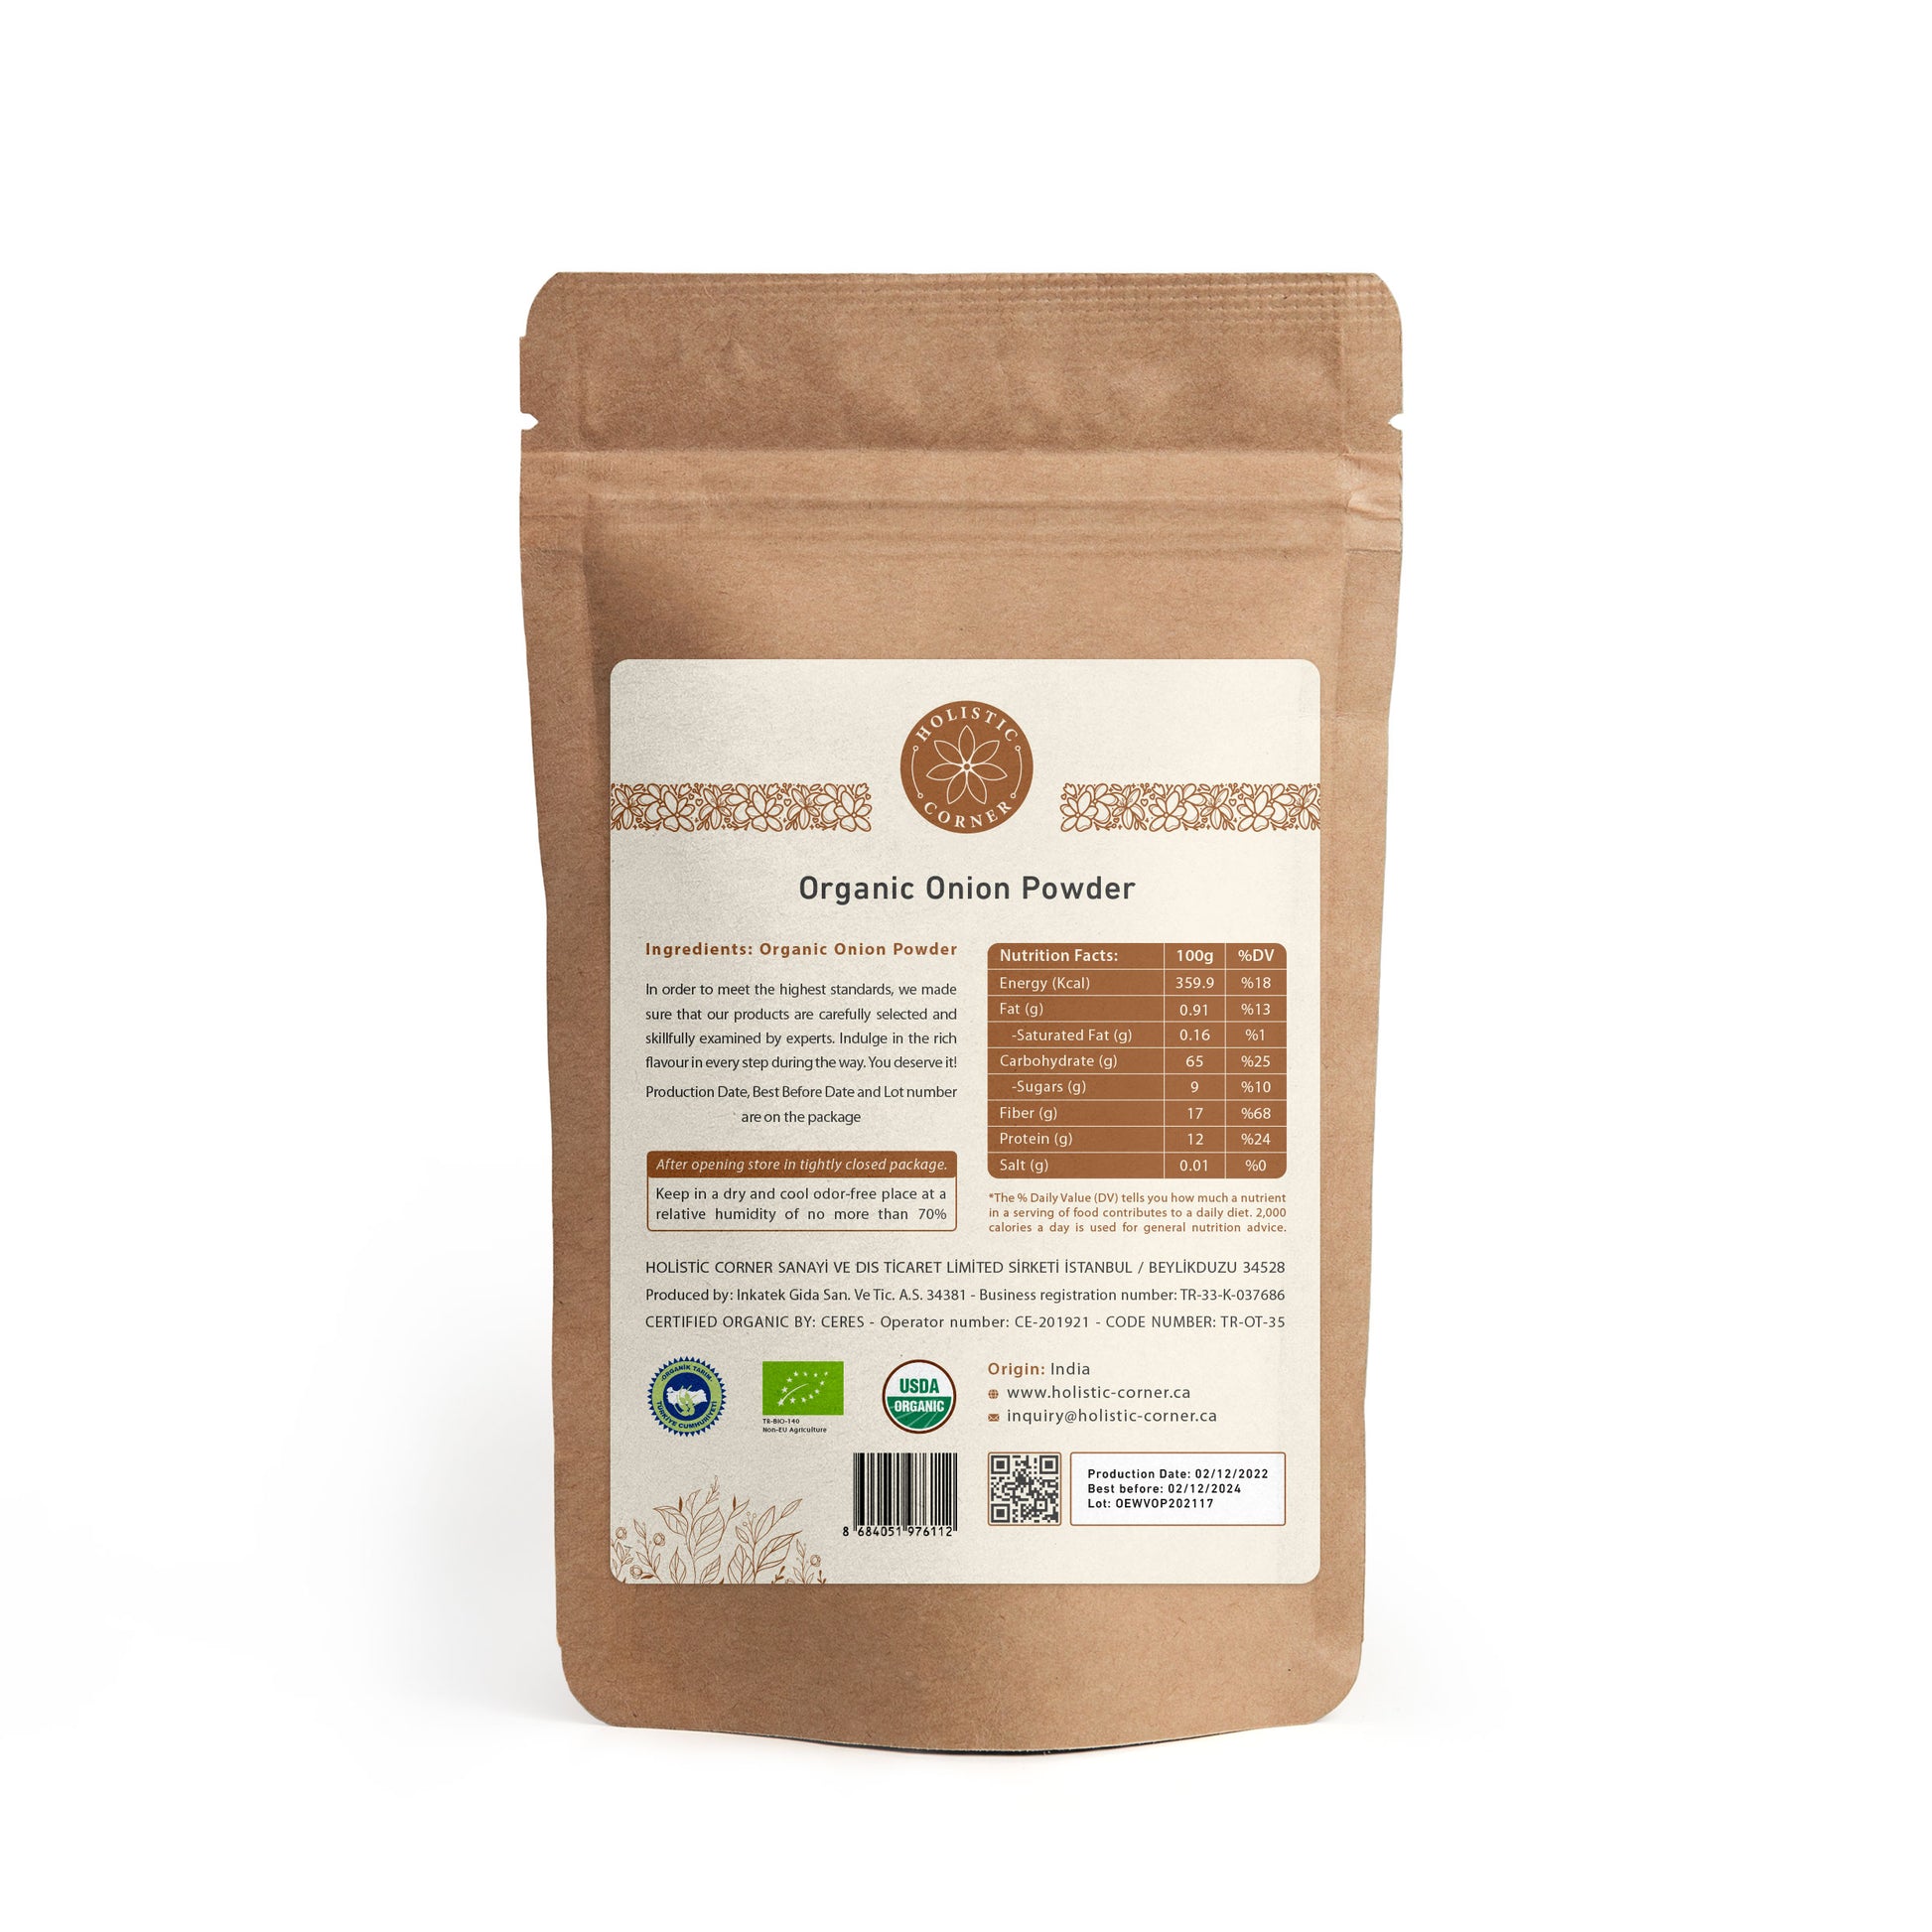 Organic Onion Powder | 0.19 lb - Flavorful and aromatic seasoning